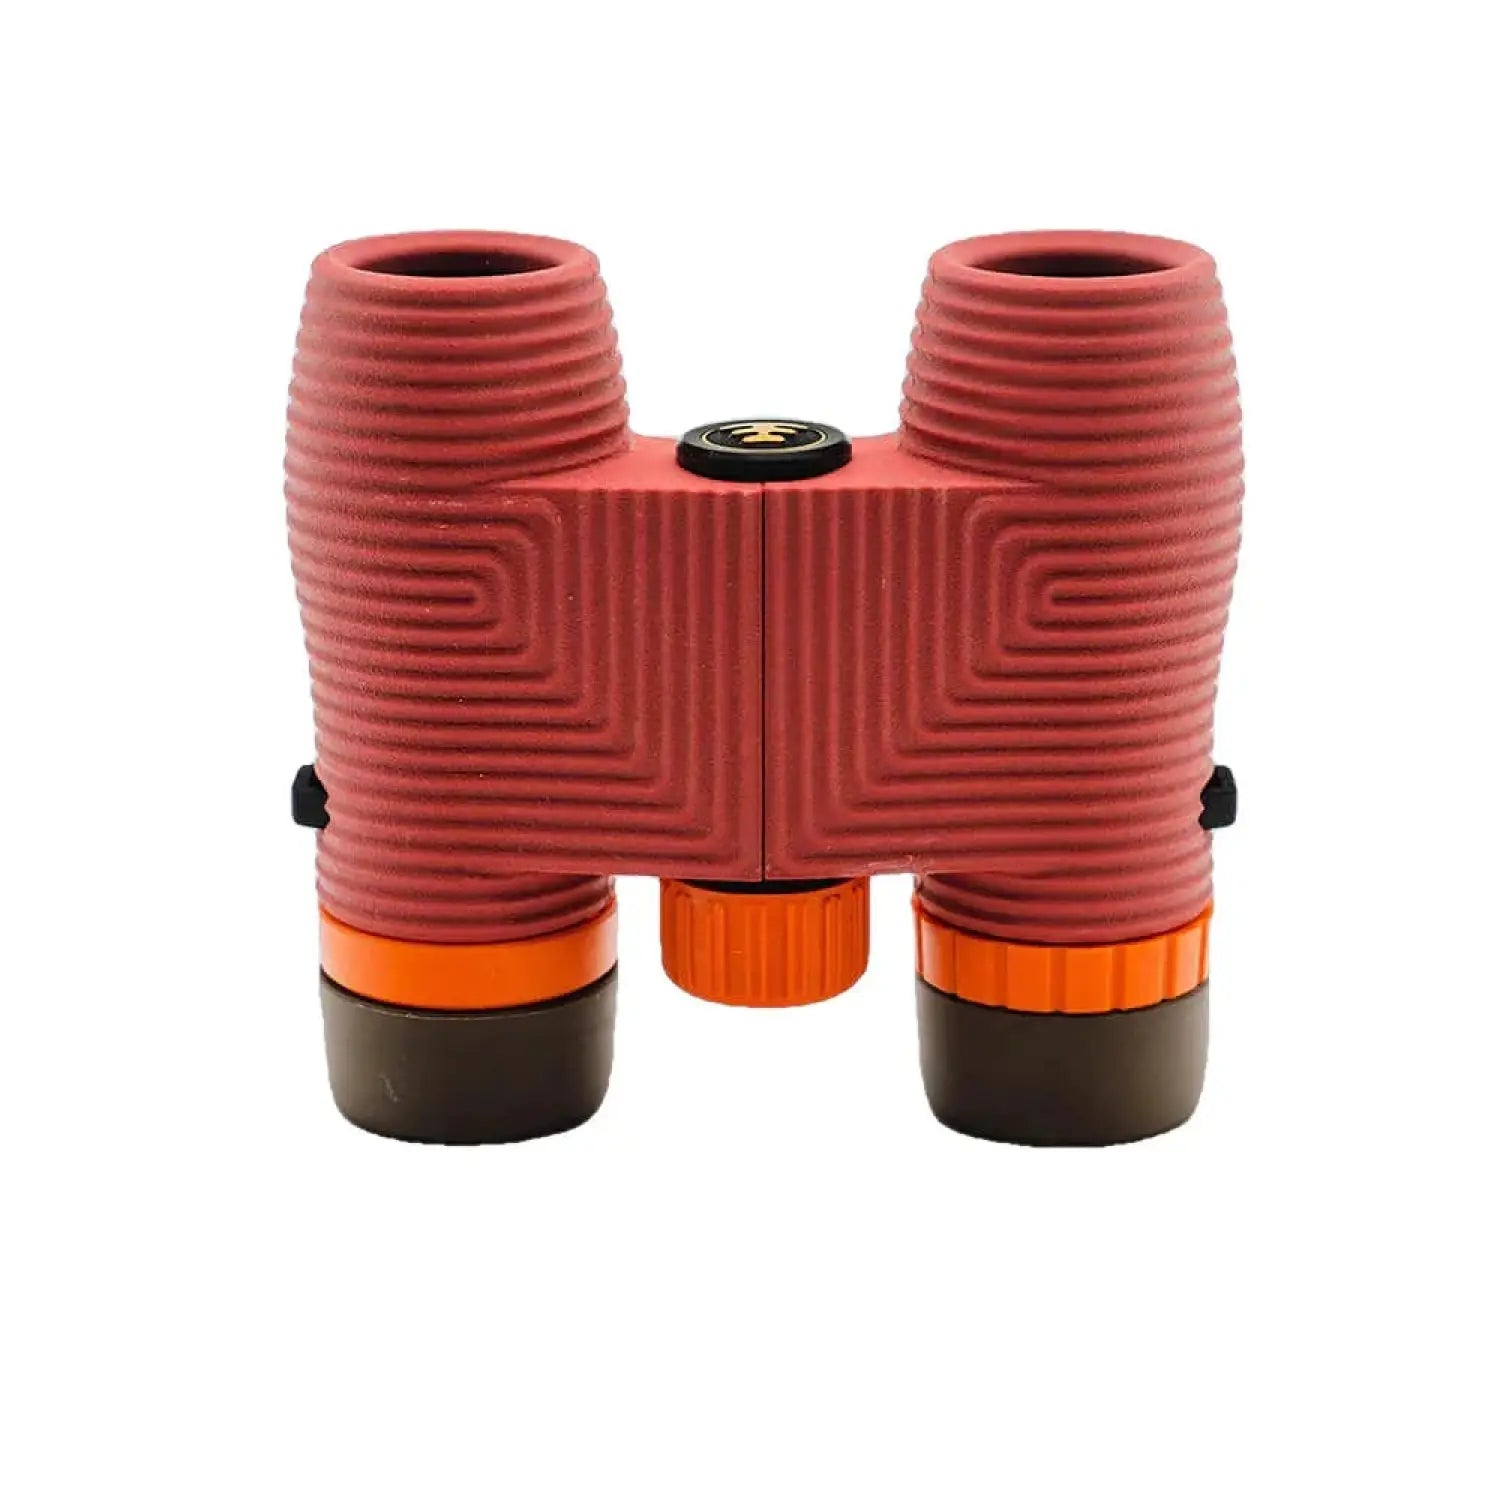 Nocs Standard Issue 10x25 Waterproof Binoculars, Manzanita Red, top view 